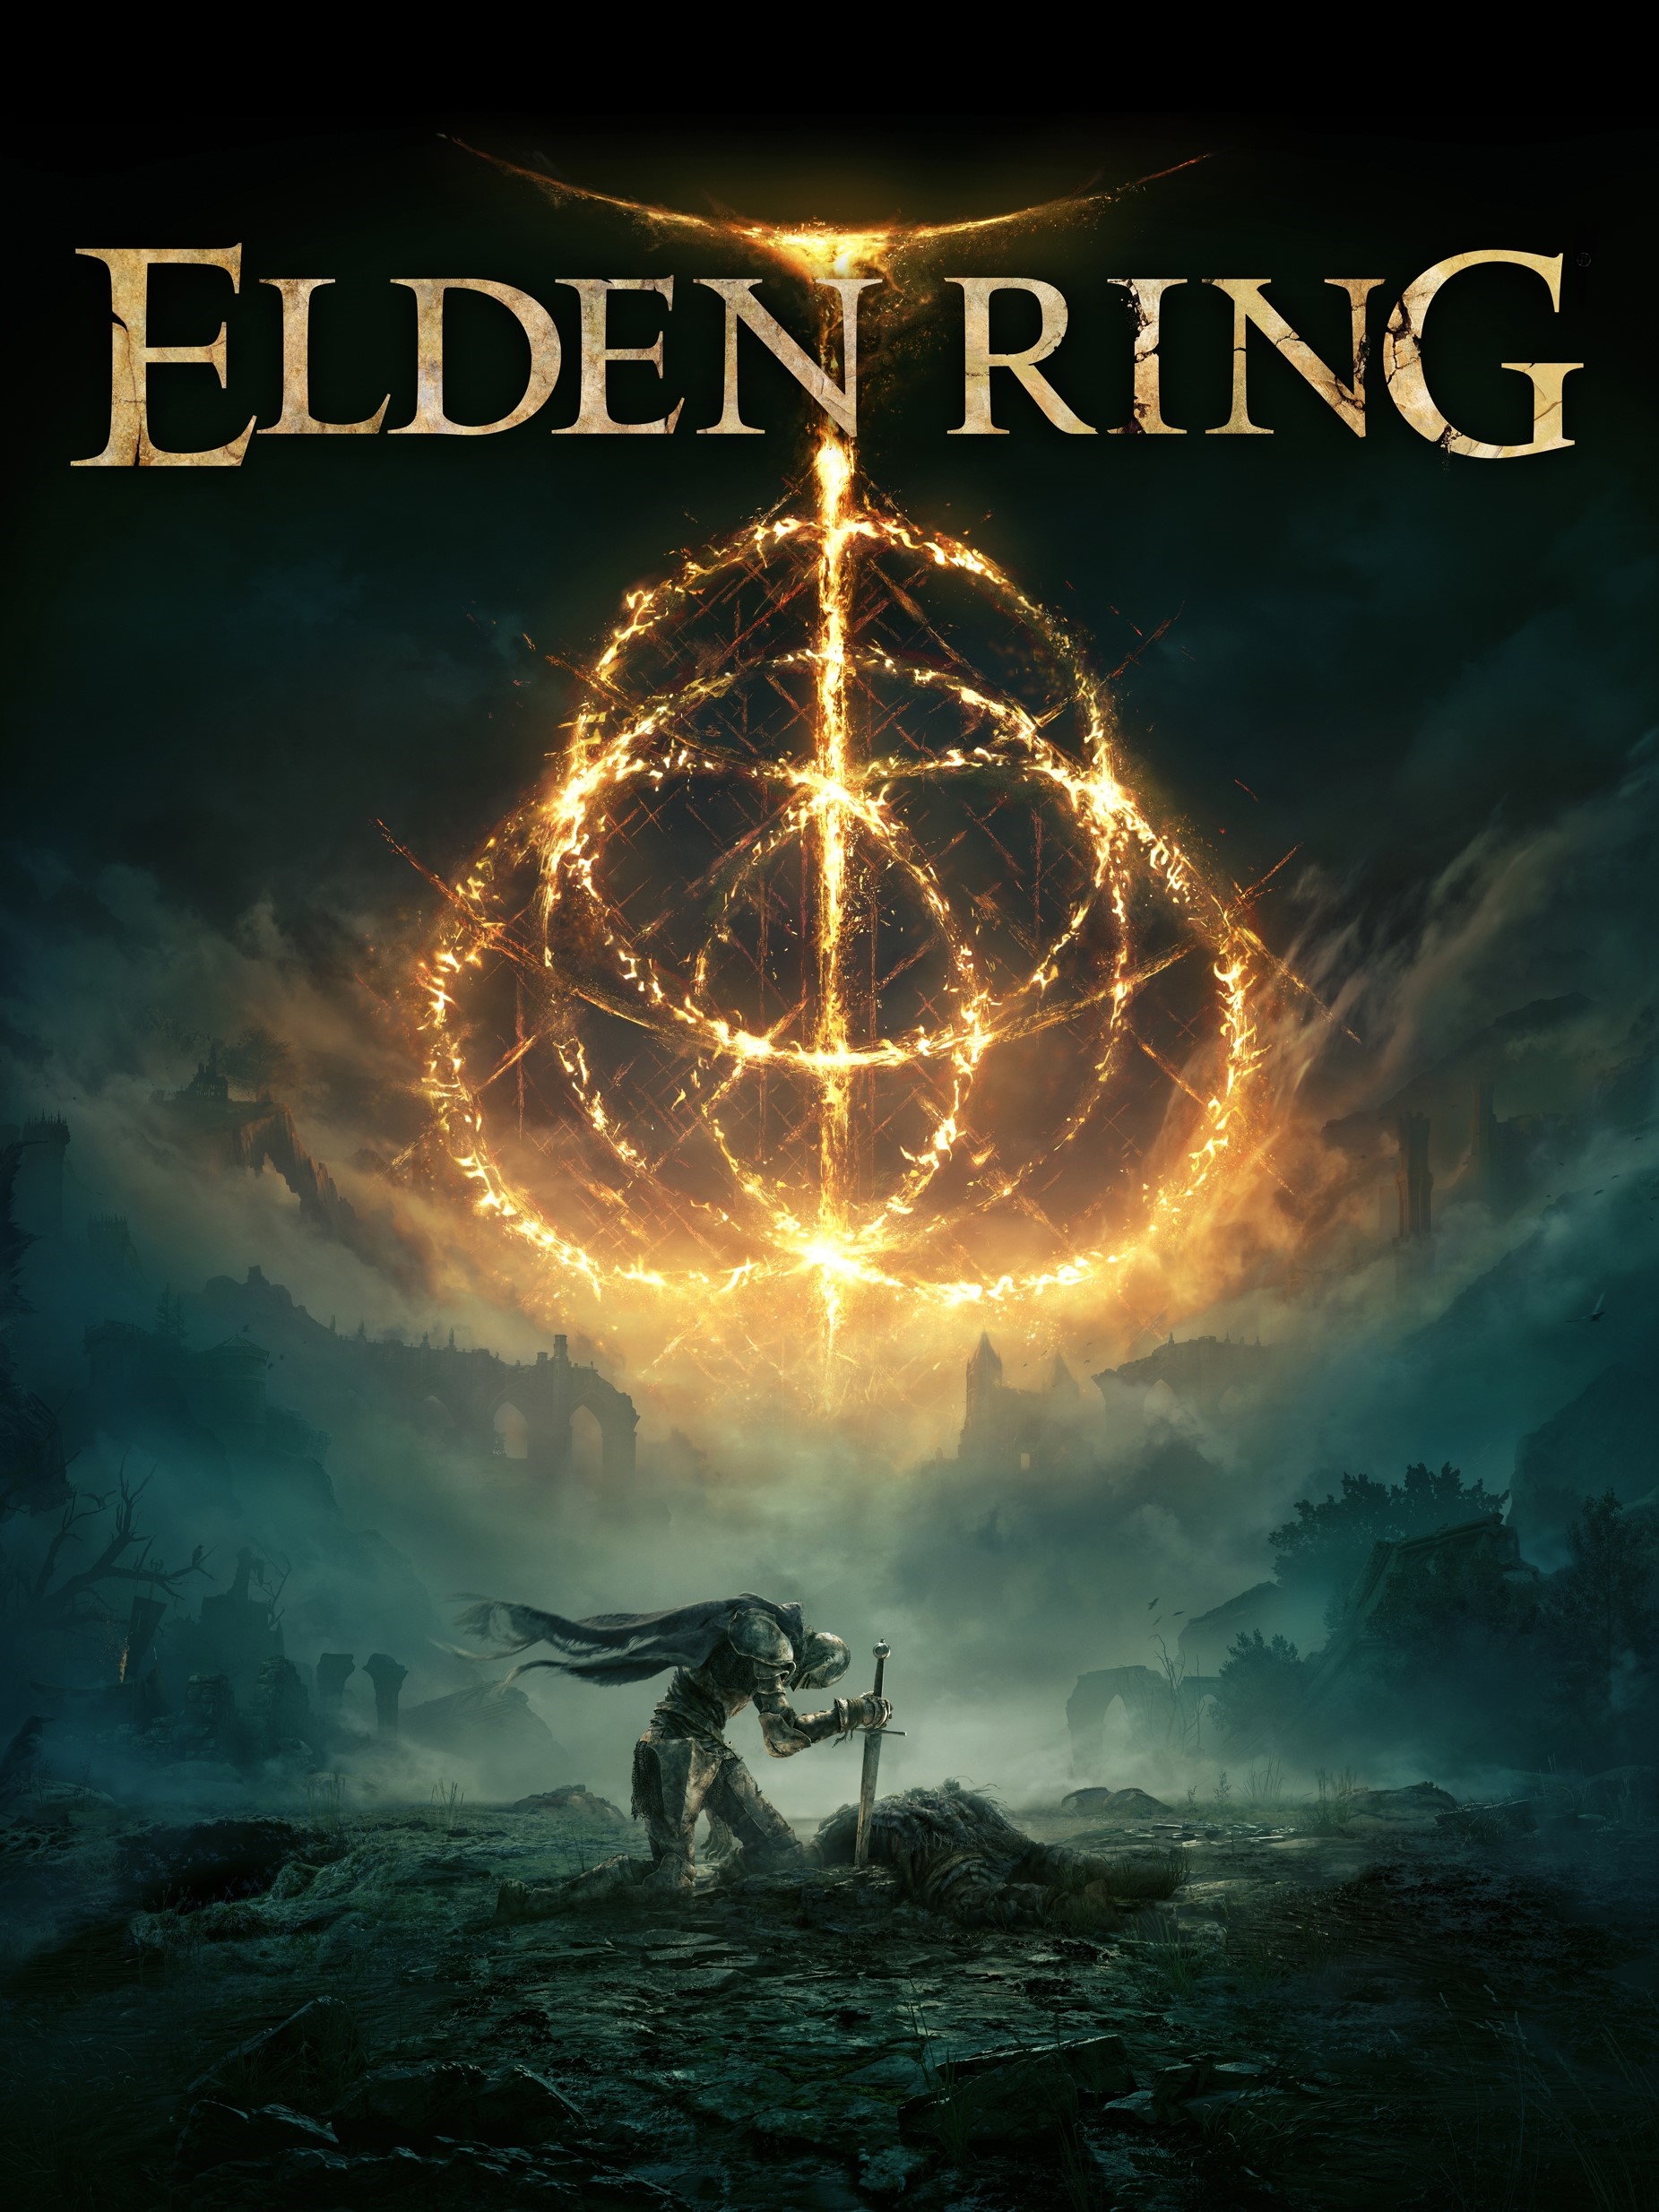 How Many Days Until Elden Ring?